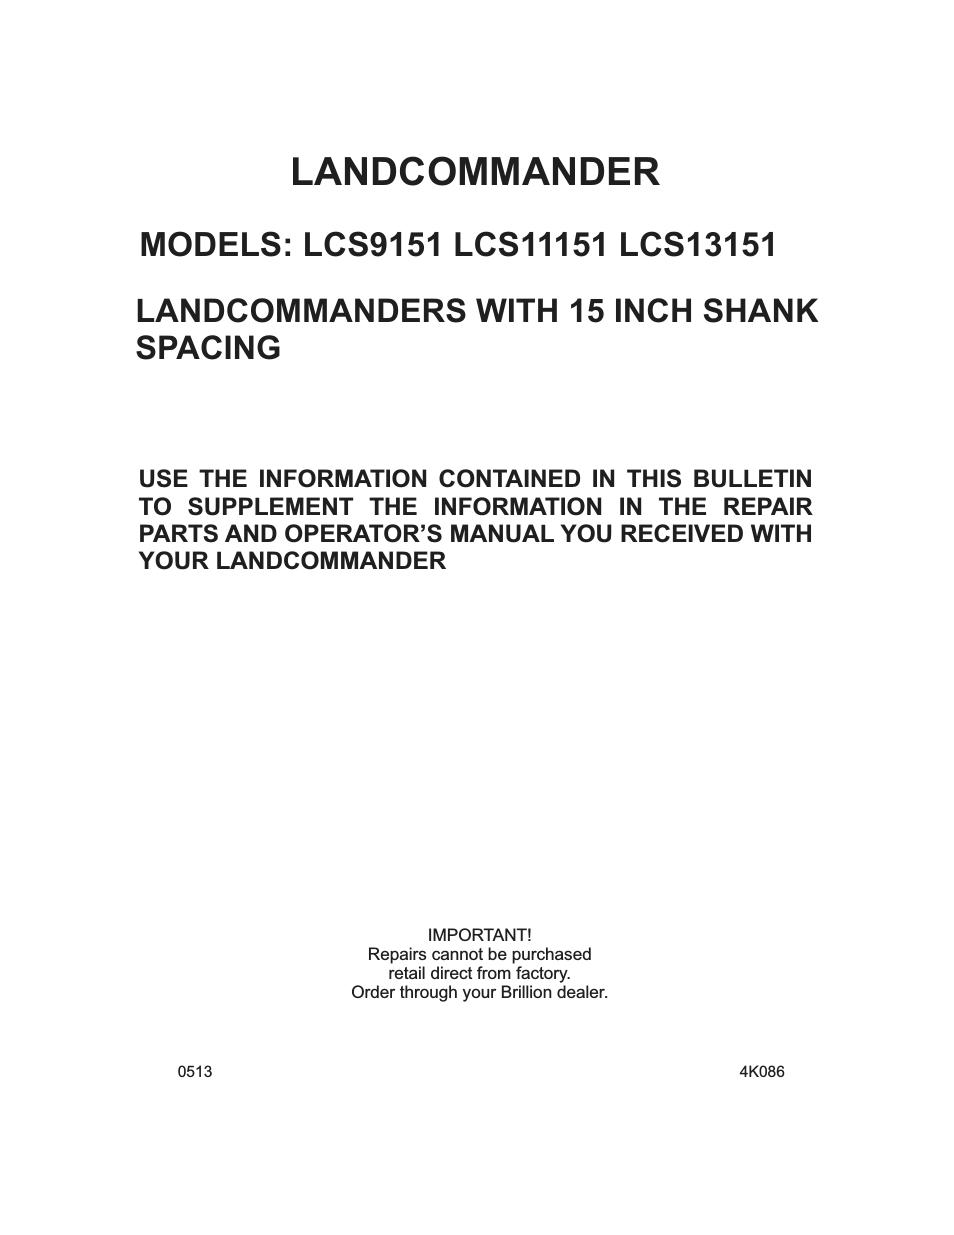 LCS13151 LANDCOMMANDER